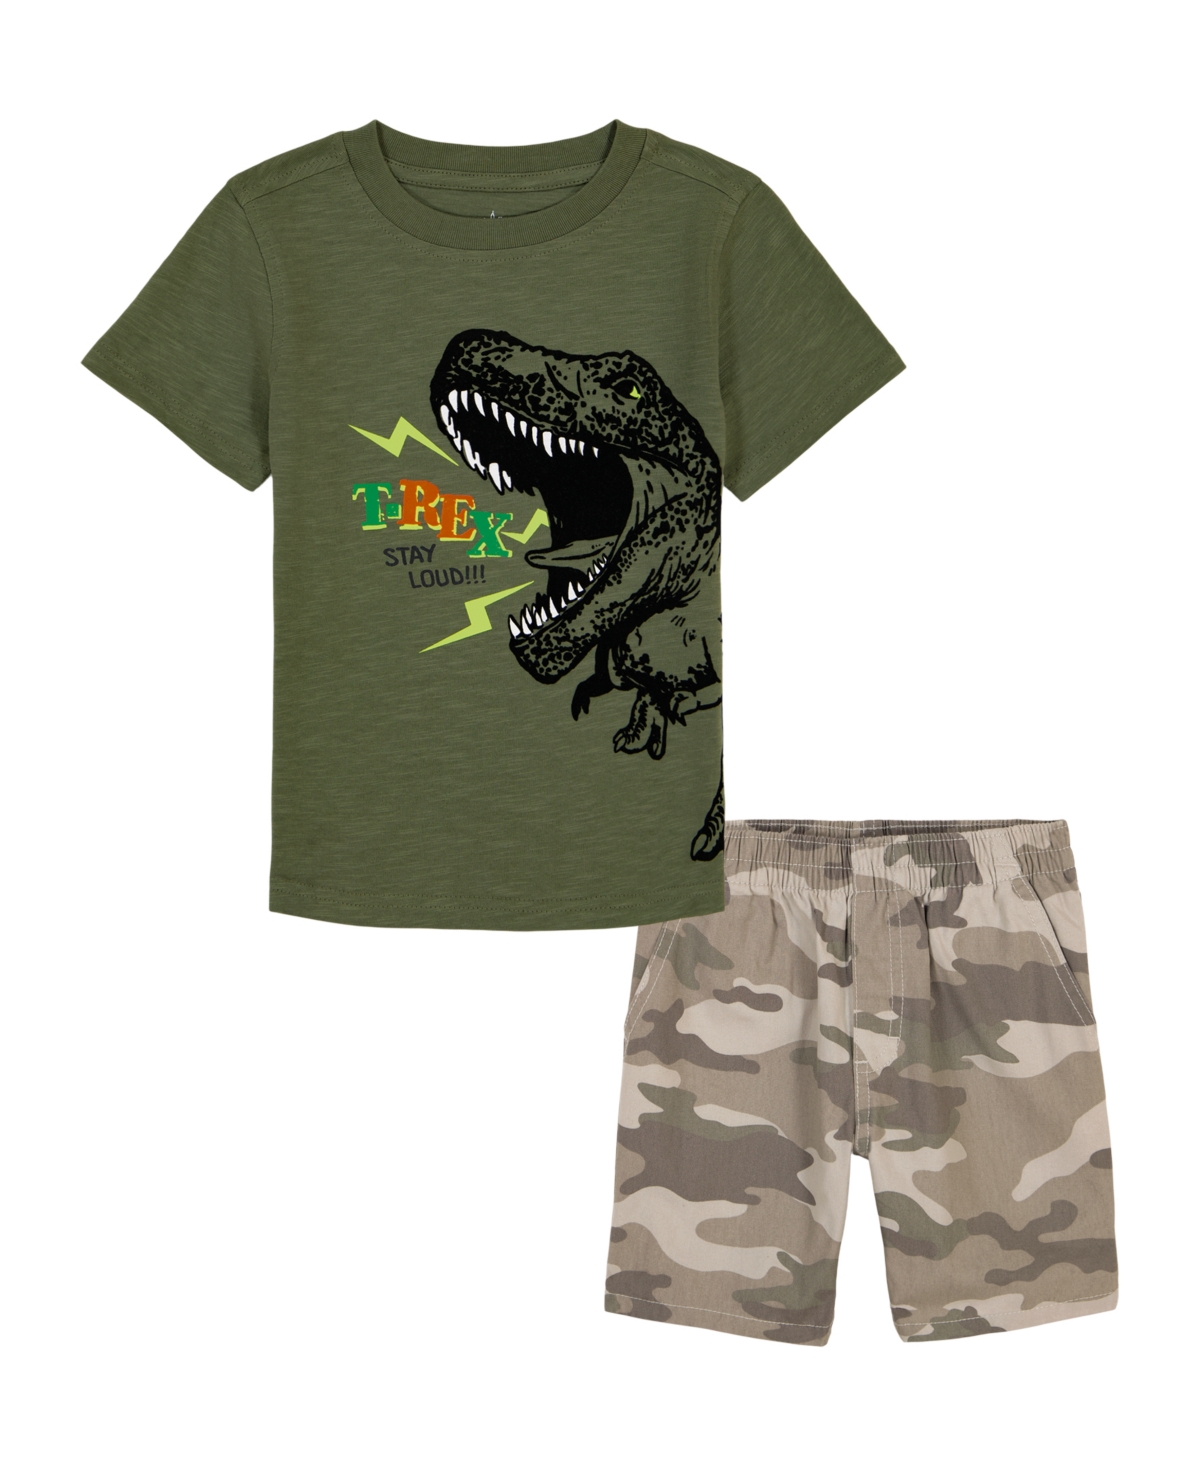 Kids Headquarters Kids' Toddler Boys Short Sleeve Dinosaur T-shirt And Prewashed Canvas Shorts Set In Gree,camo